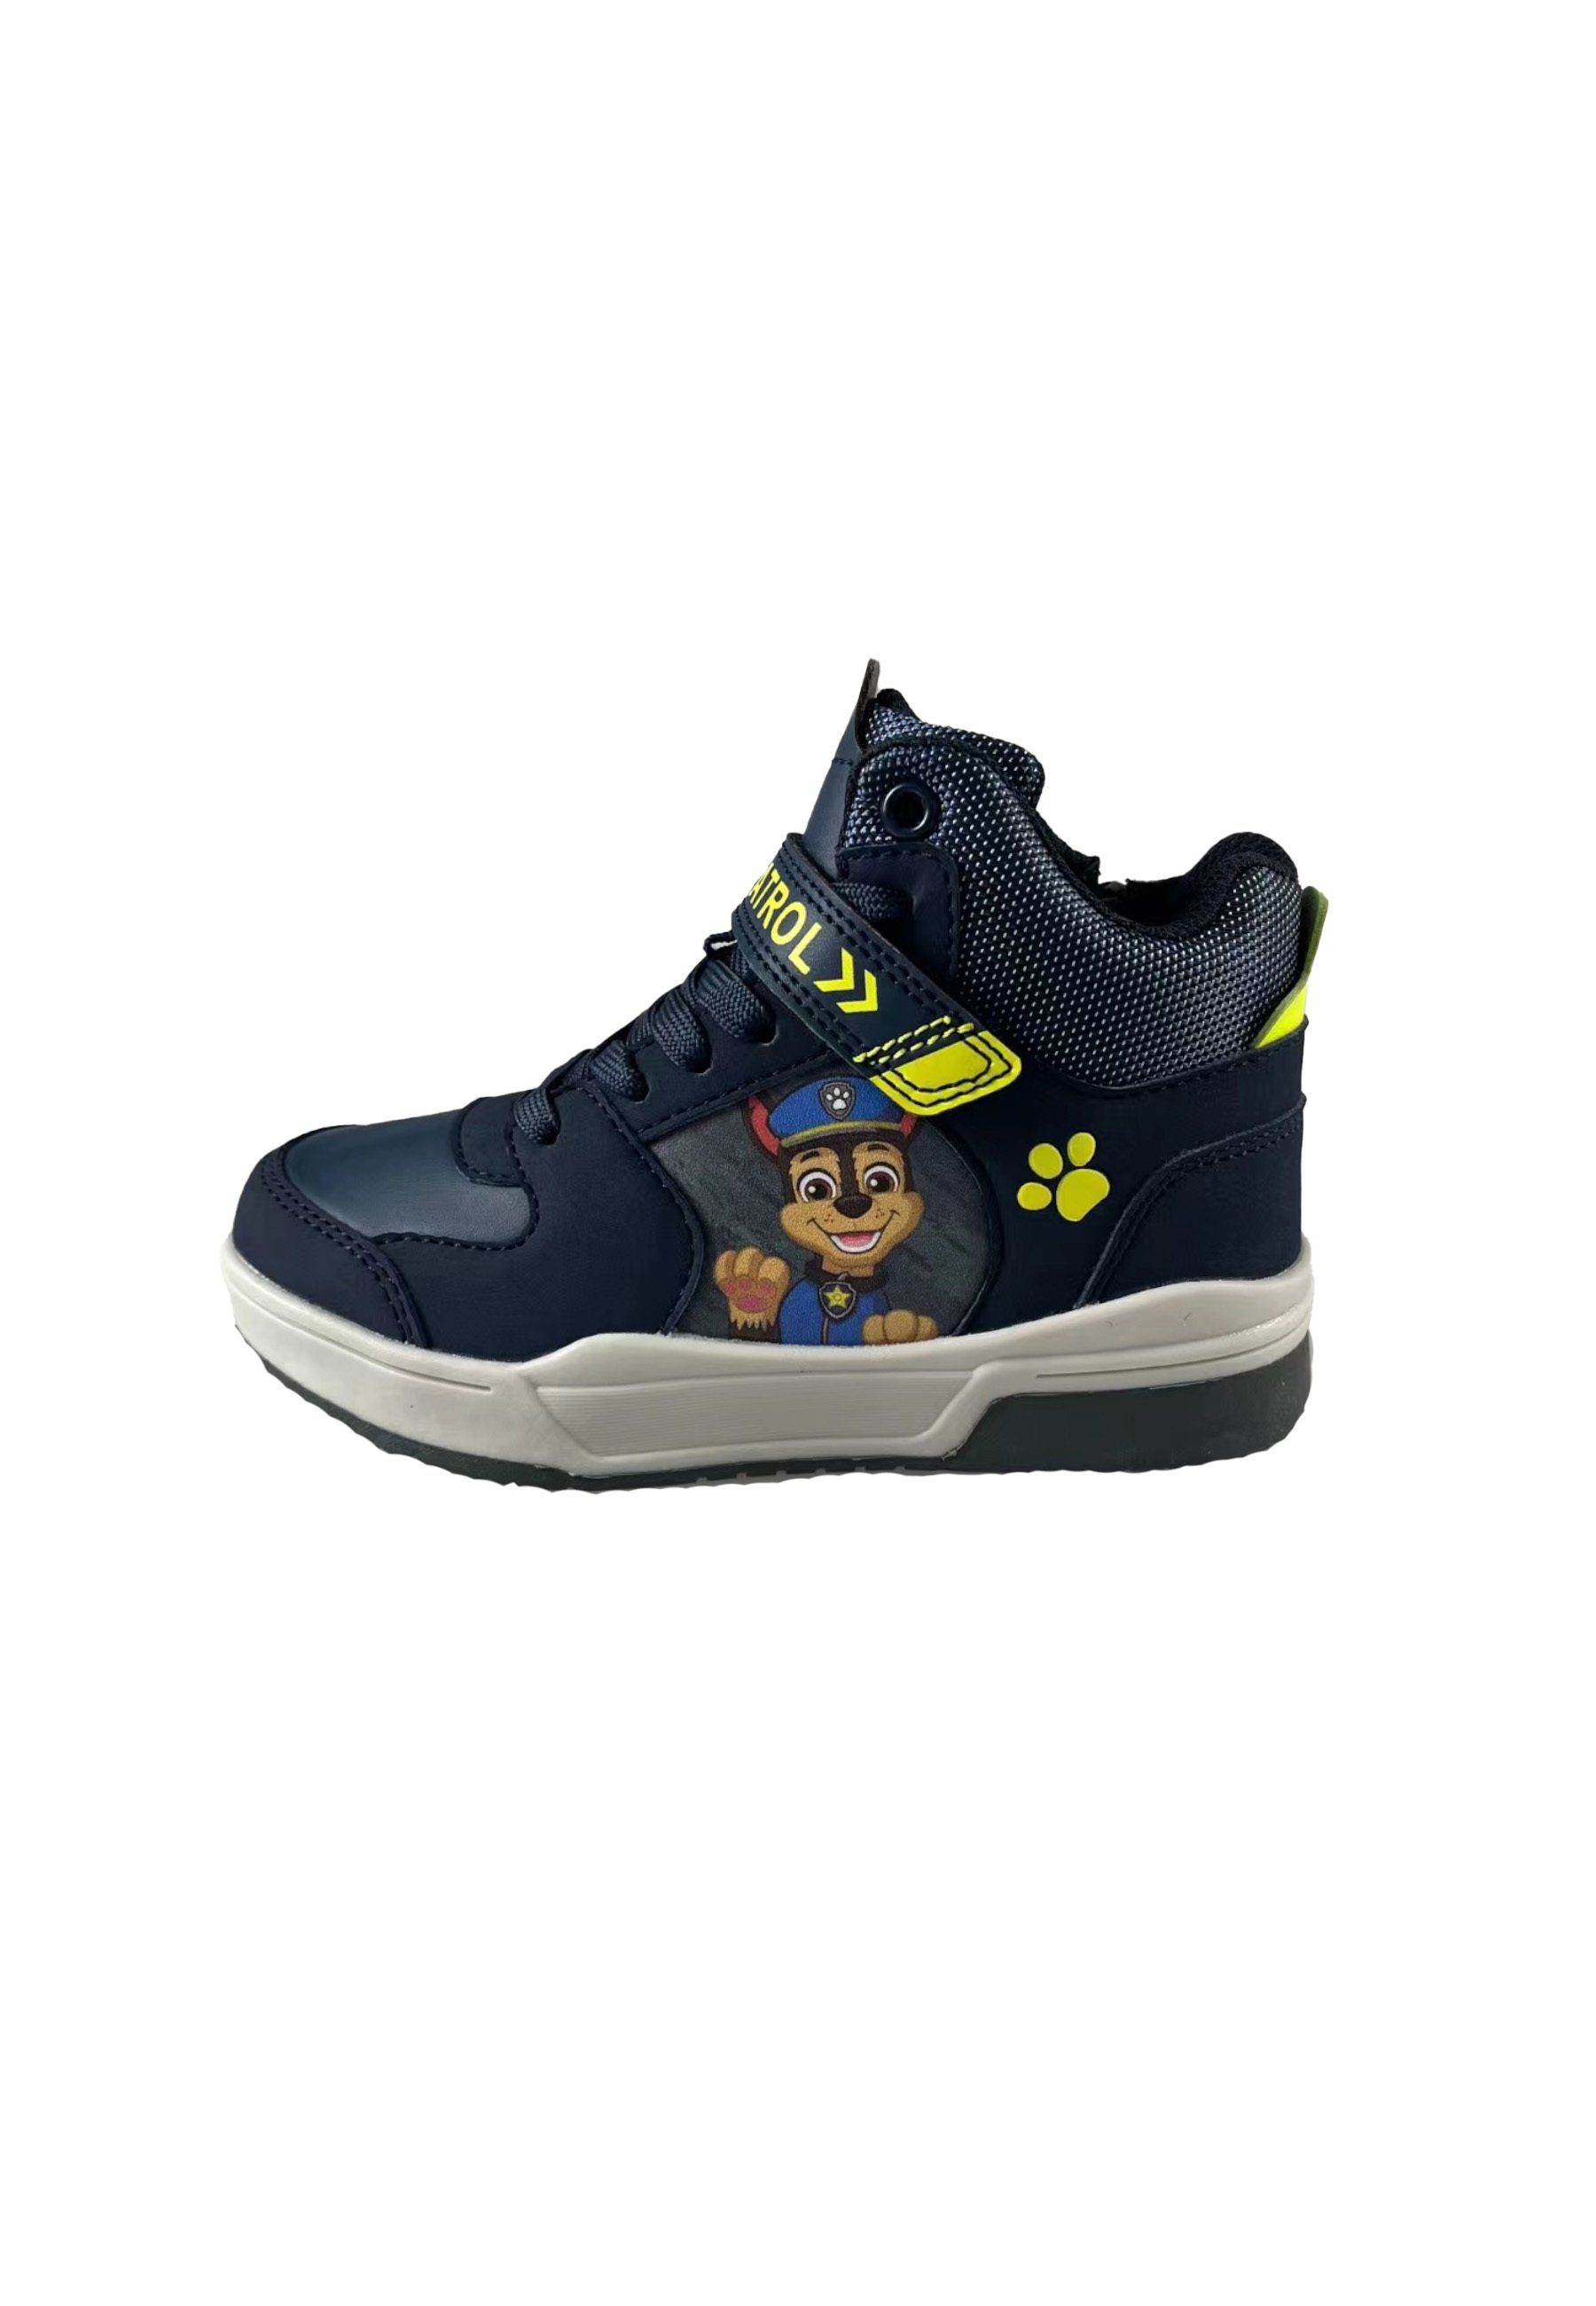 Kids2Go PawPatrol HighCut- Sneaker mit Klett- und Reißverschluss Sneaker Mit Klett- und Reißverschluss. Vegan. Lasche an der Ferse.